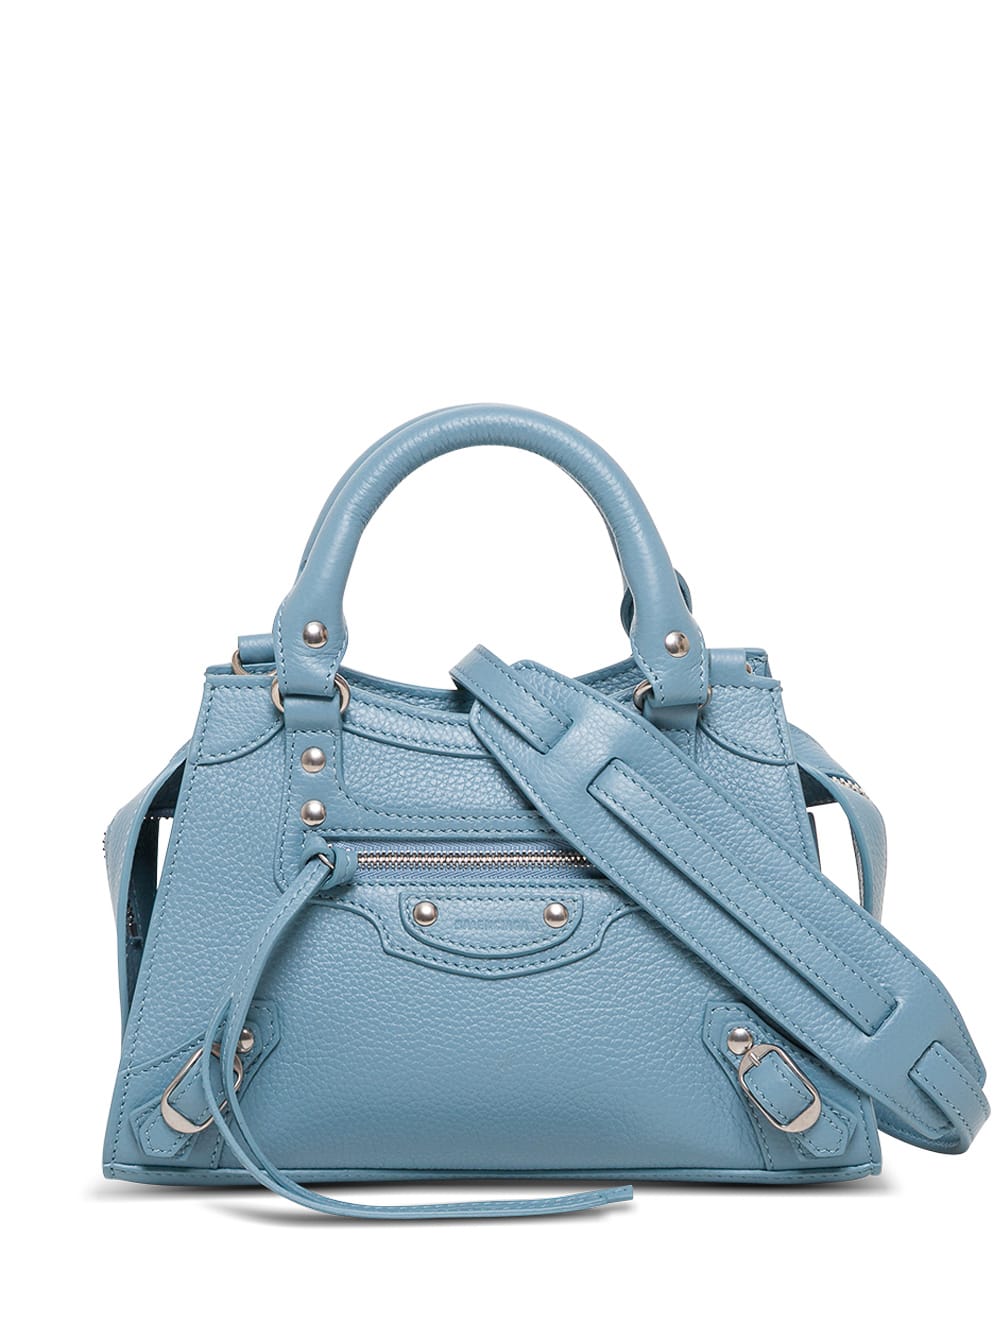 Balenciaga Neo Classic City Mini Handbag In Light Blue Leather